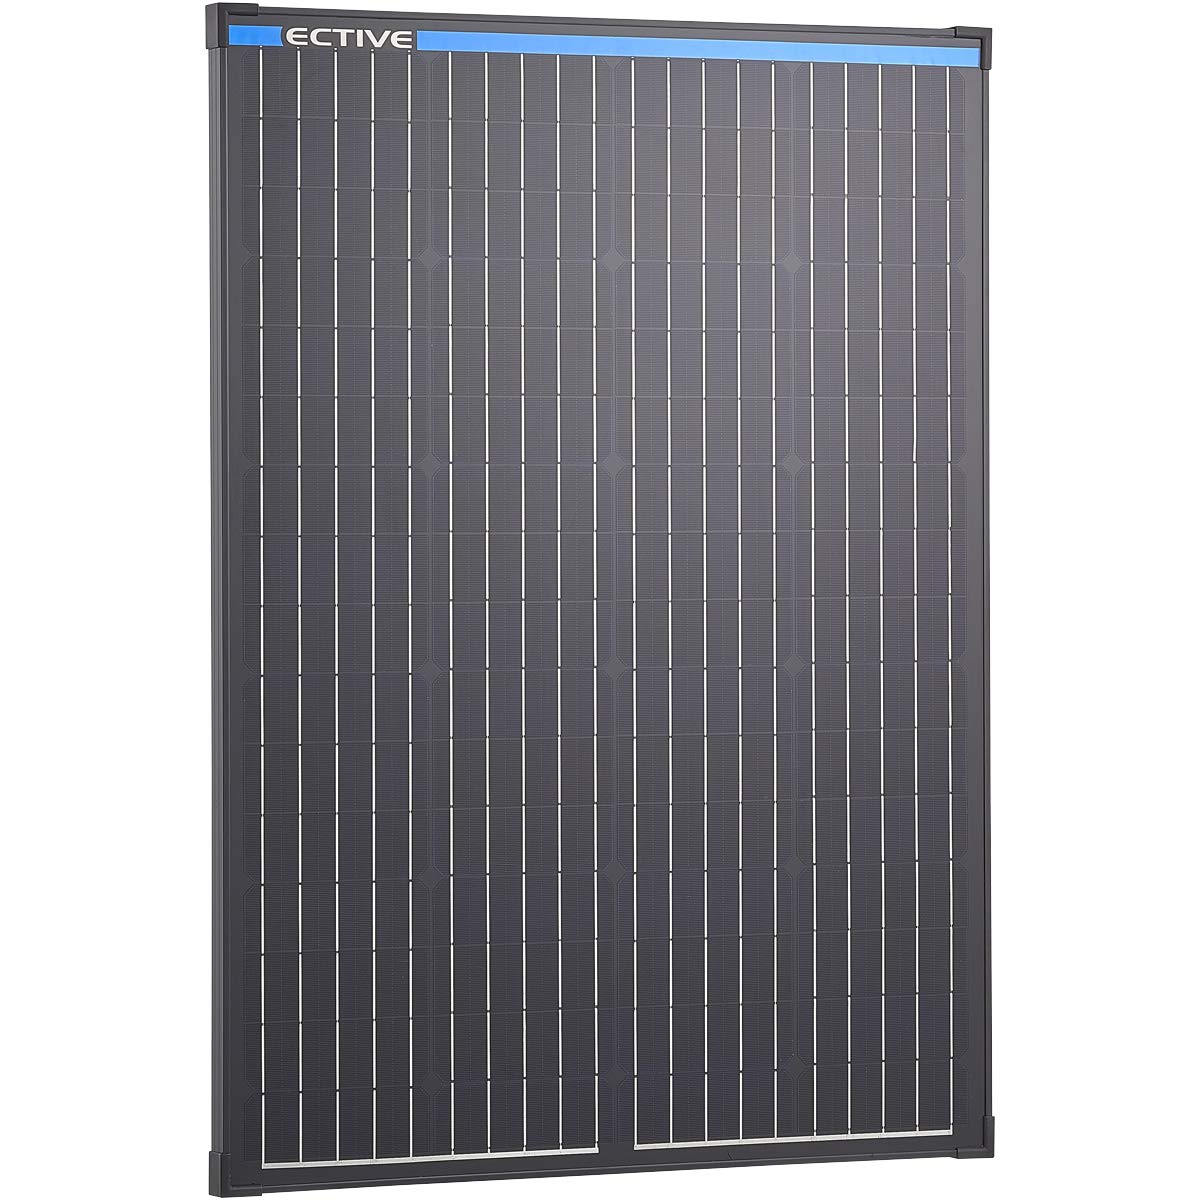 ECTIVE Solarpanel MSP 120s Black - 120W, 3,32A, 72 Zellen, für 12V 24V Batterieladeregler - Monokristallines Solarmodul, Camping Garten Solaranlage für Powerstation, Solargenerator, Solarladegerät